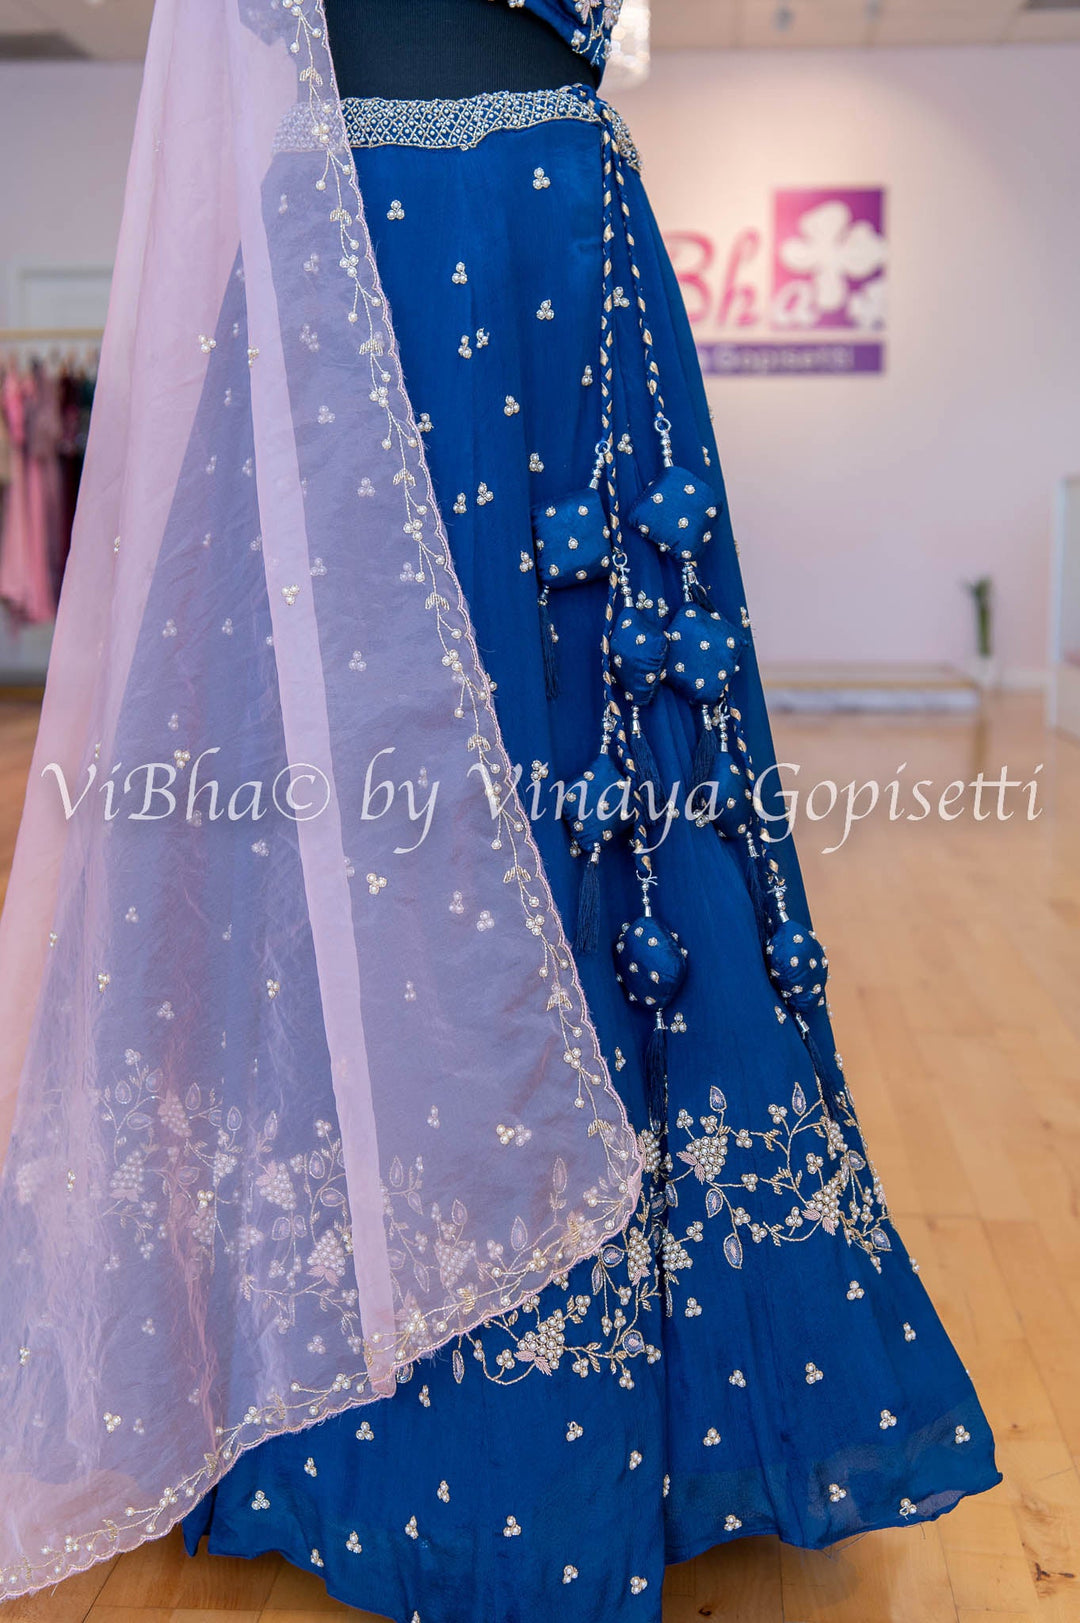 Bridal Lehengas - Ink Blue And Pastel Pink Pearl Embroidery Lehenga Set